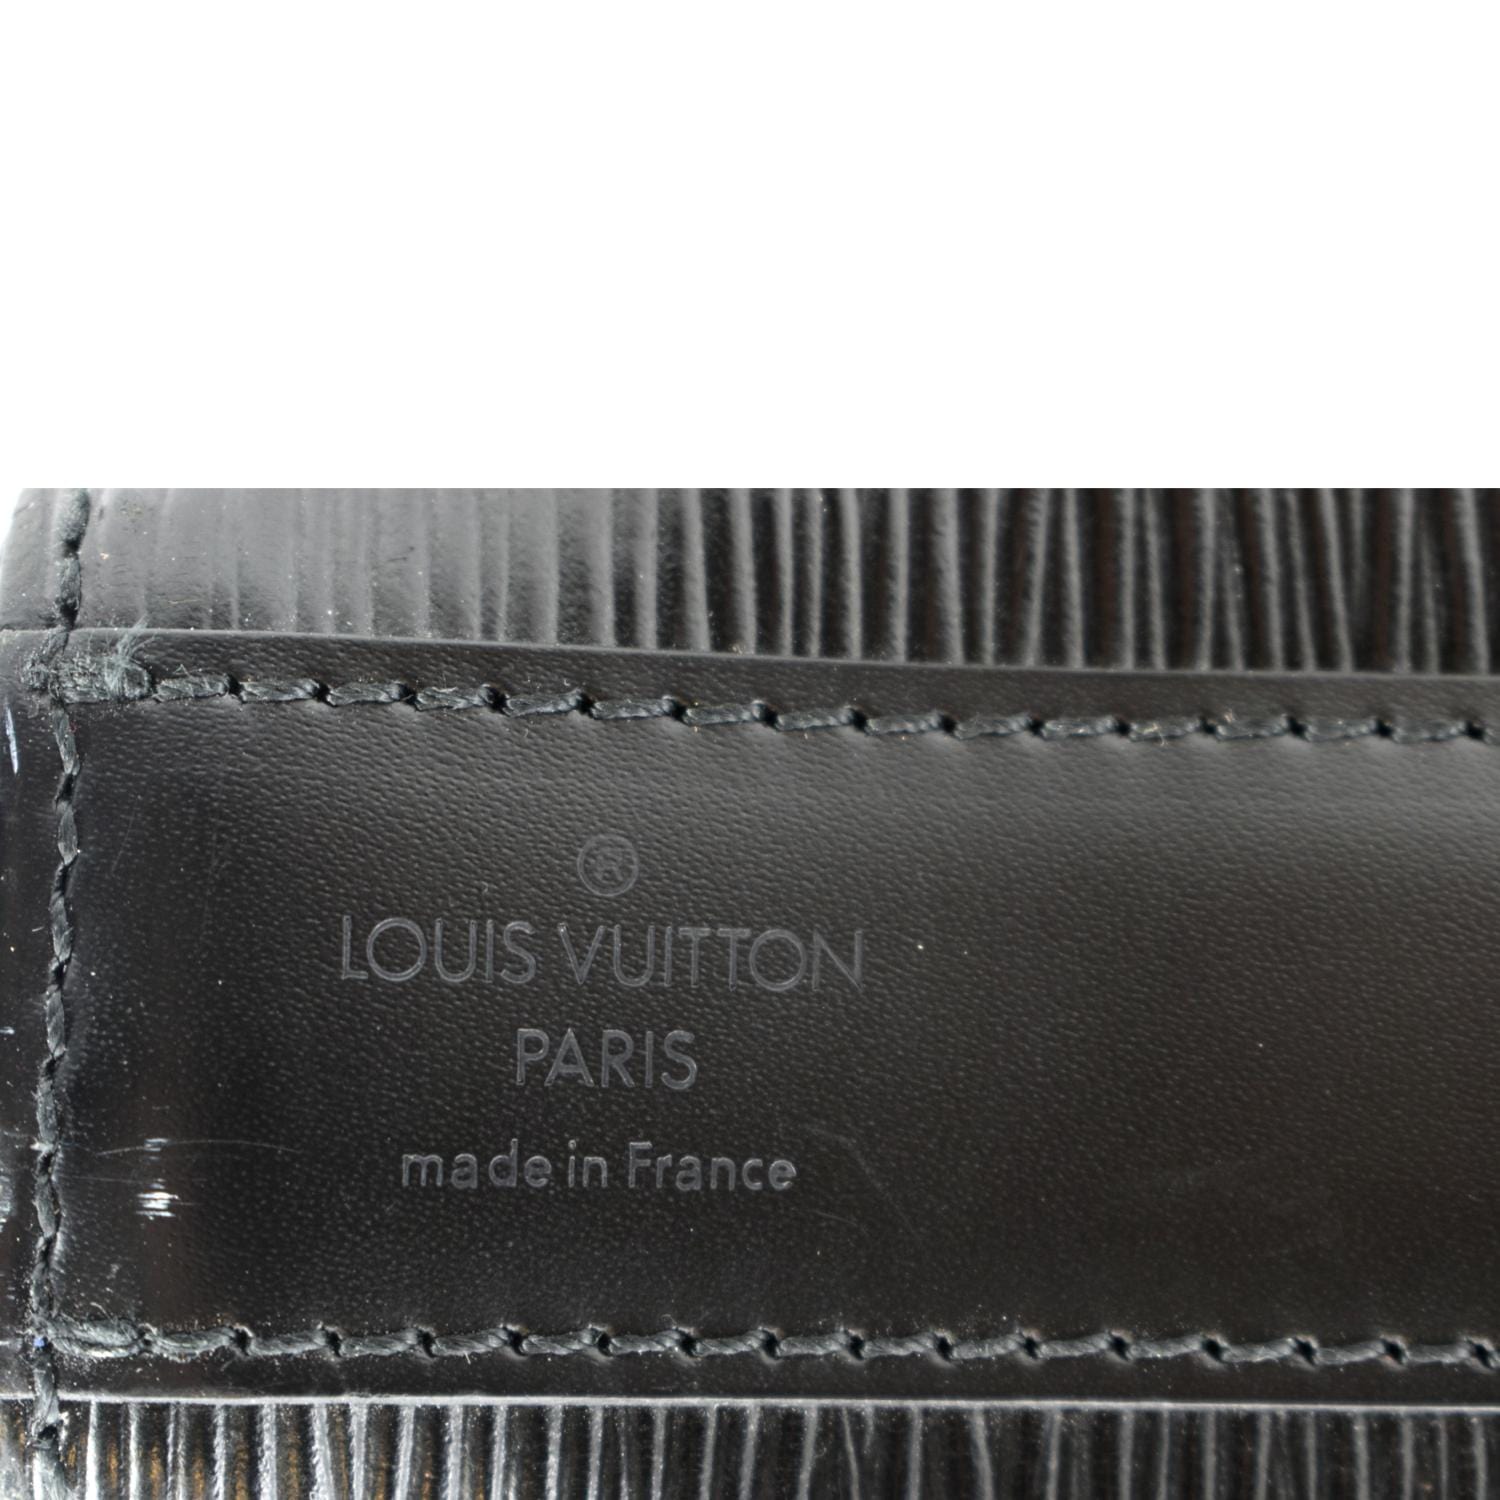 Sold at Auction: Louis Vuitton, LOUIS VUITTON TAN SAC D'EPAULE HANDBAG